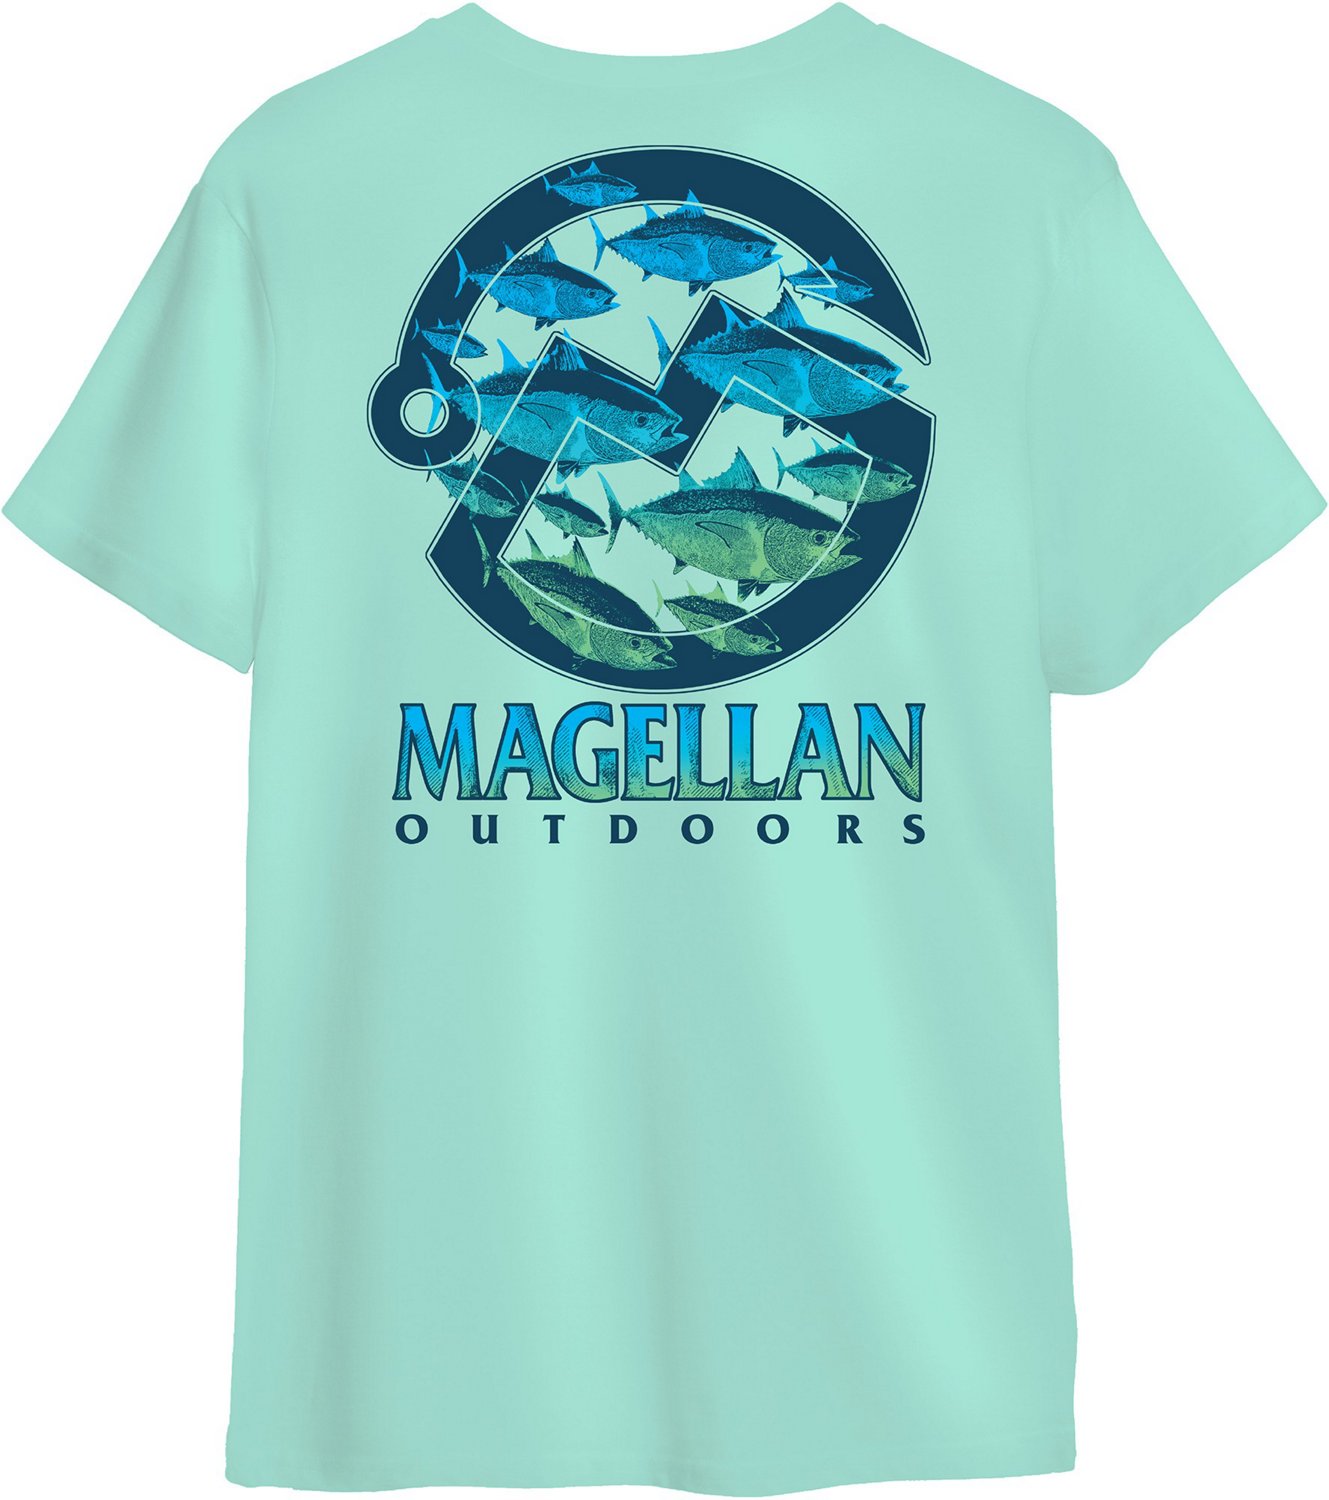 Magellan Outdoors: Boys' Clothing